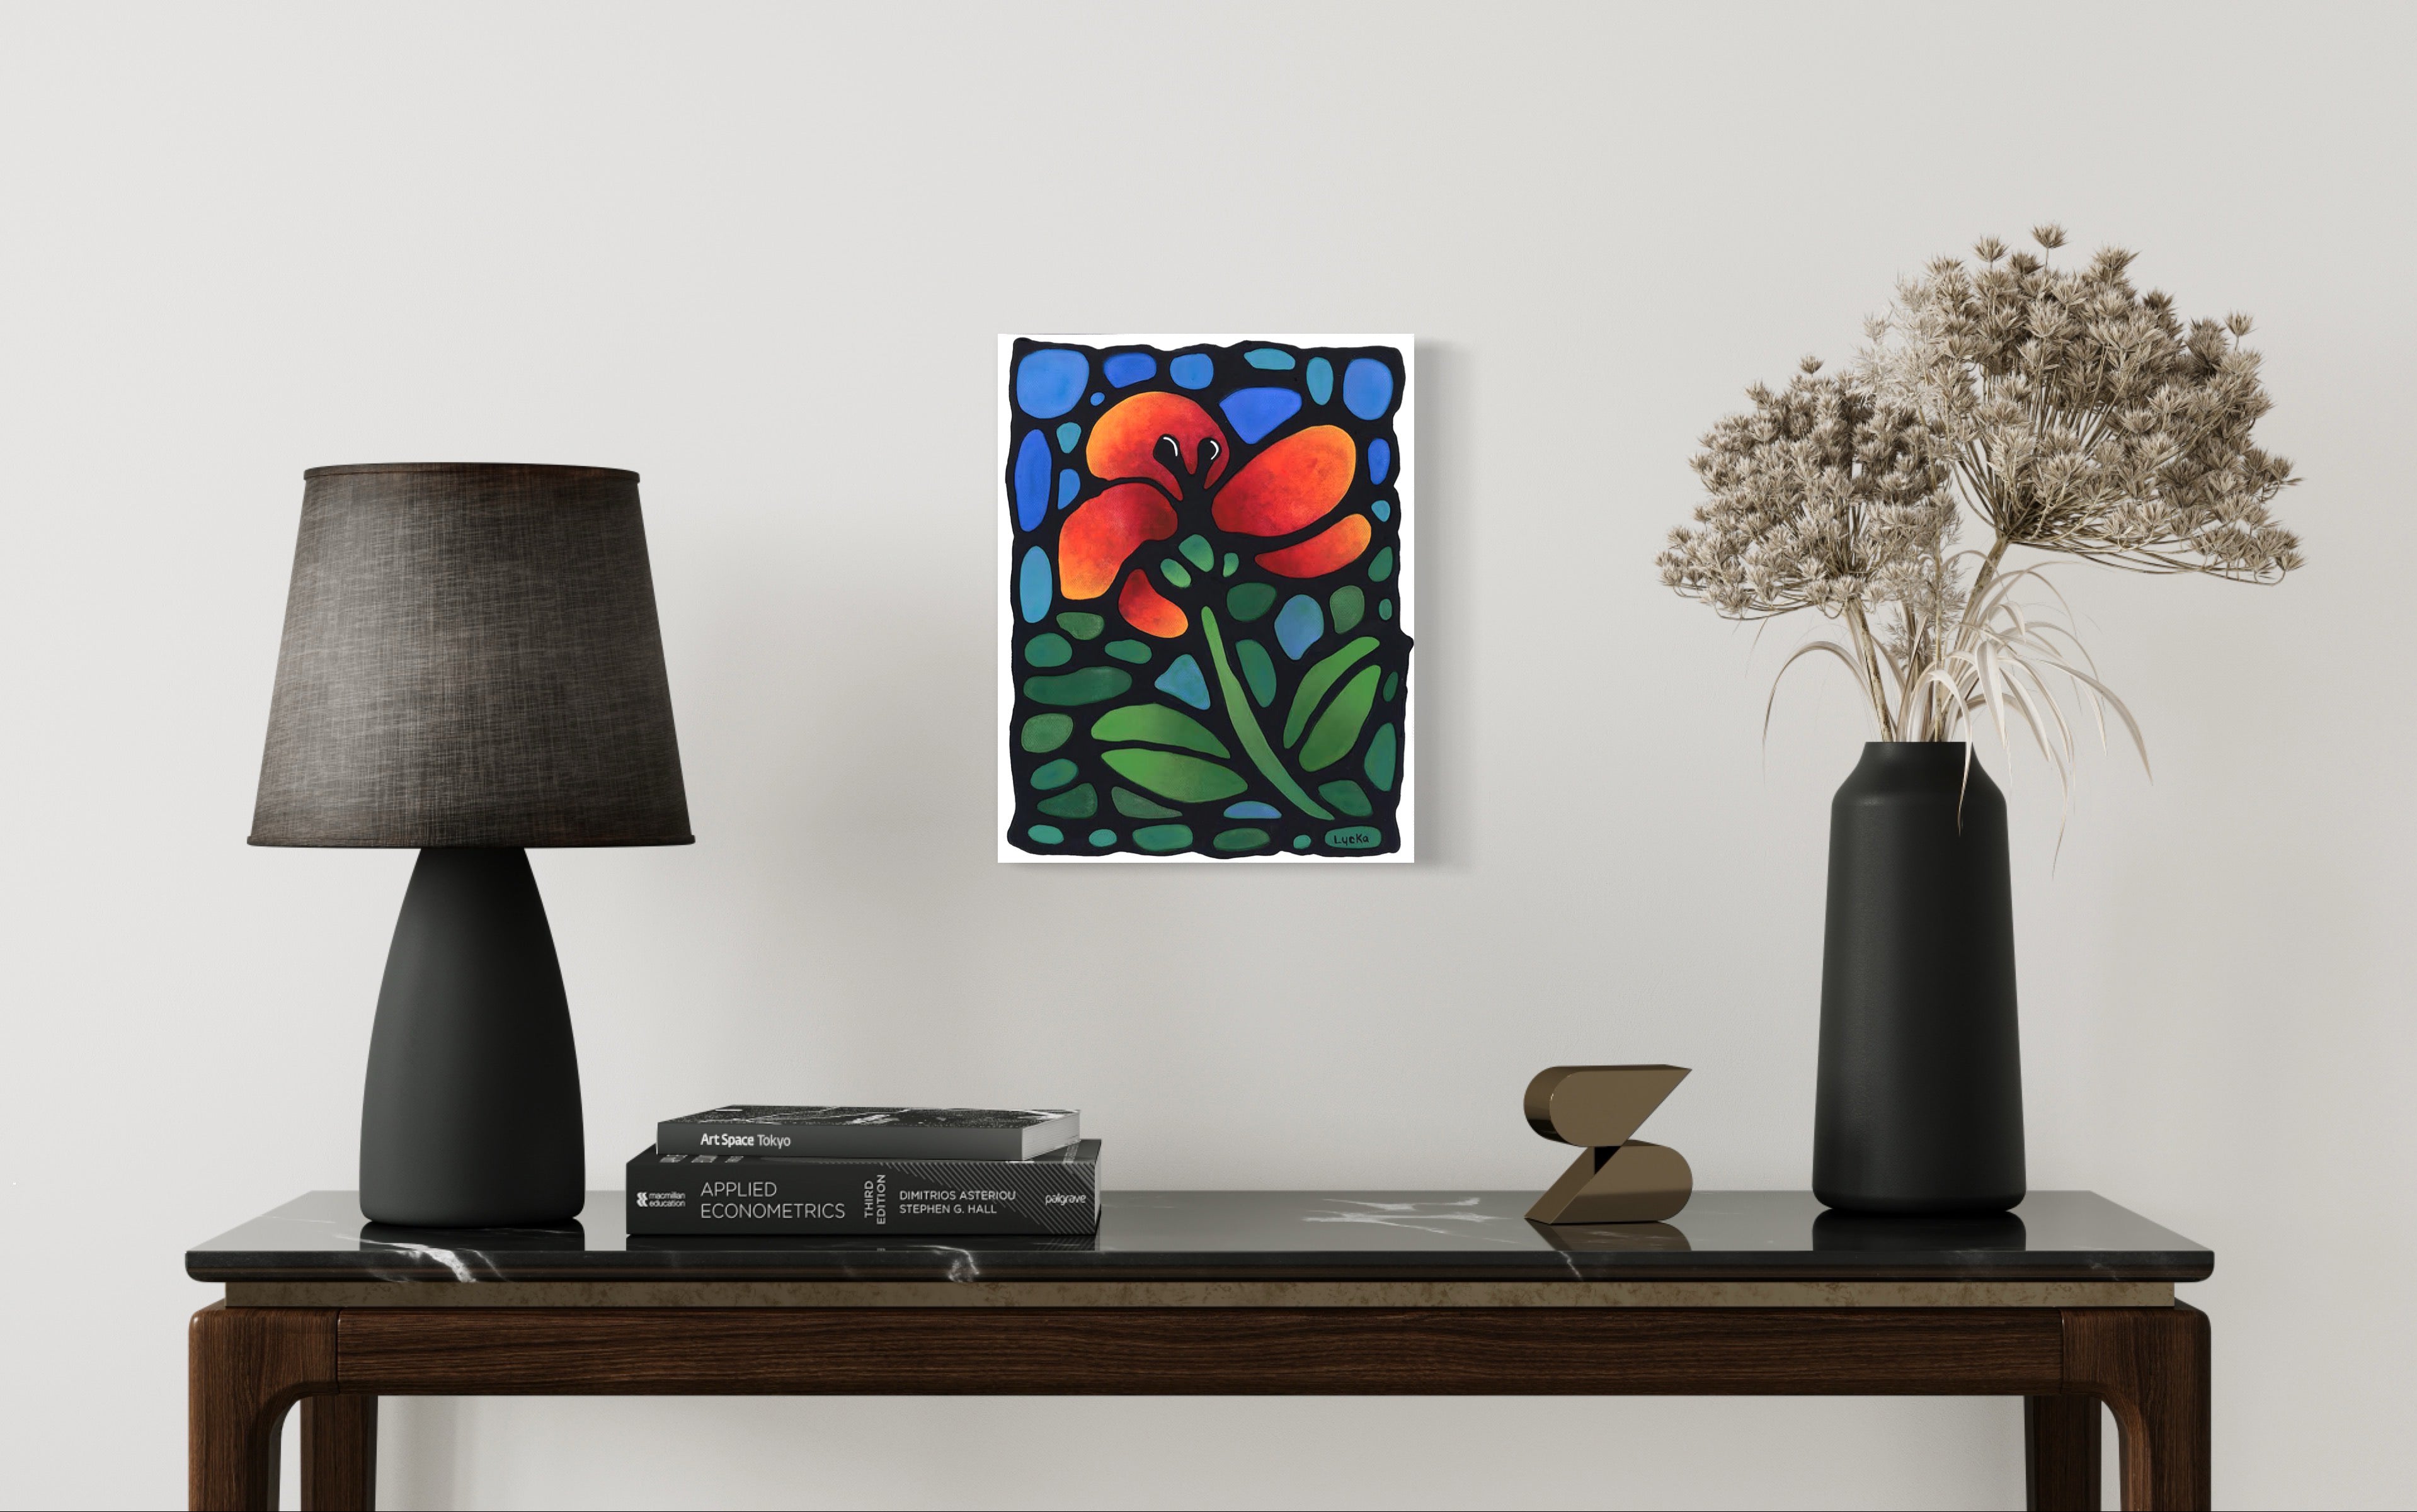 Poppy Flower Original Painting 9 x 12 inch Canvas